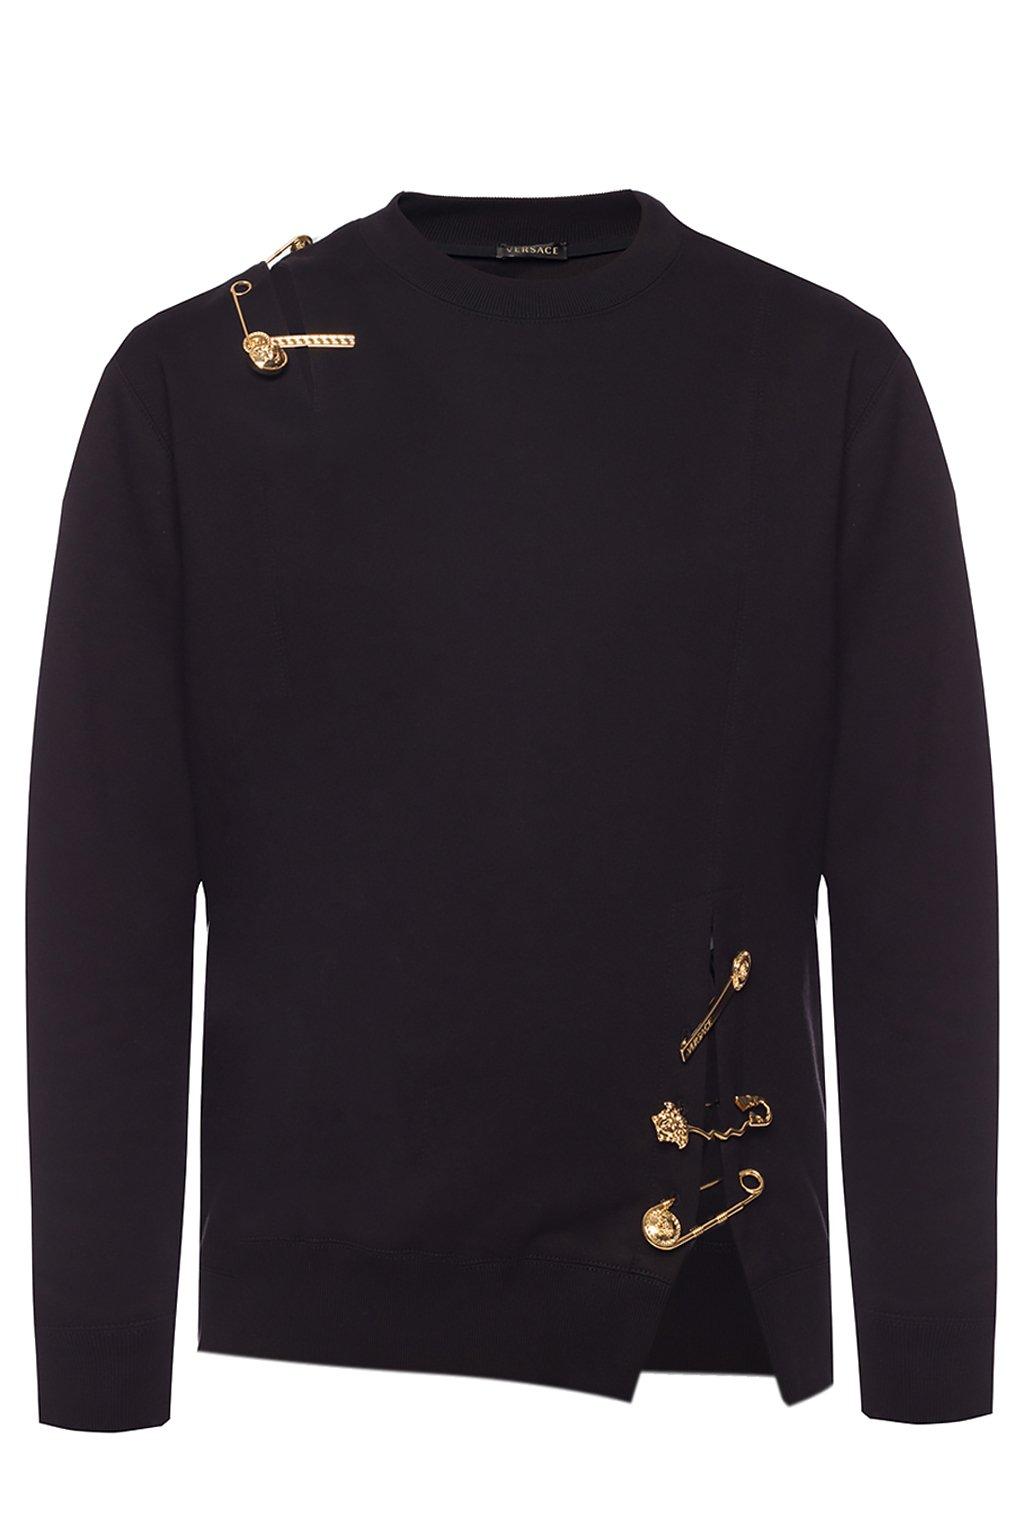 Versace Safety-pin Sweatshirt in Black | Lyst